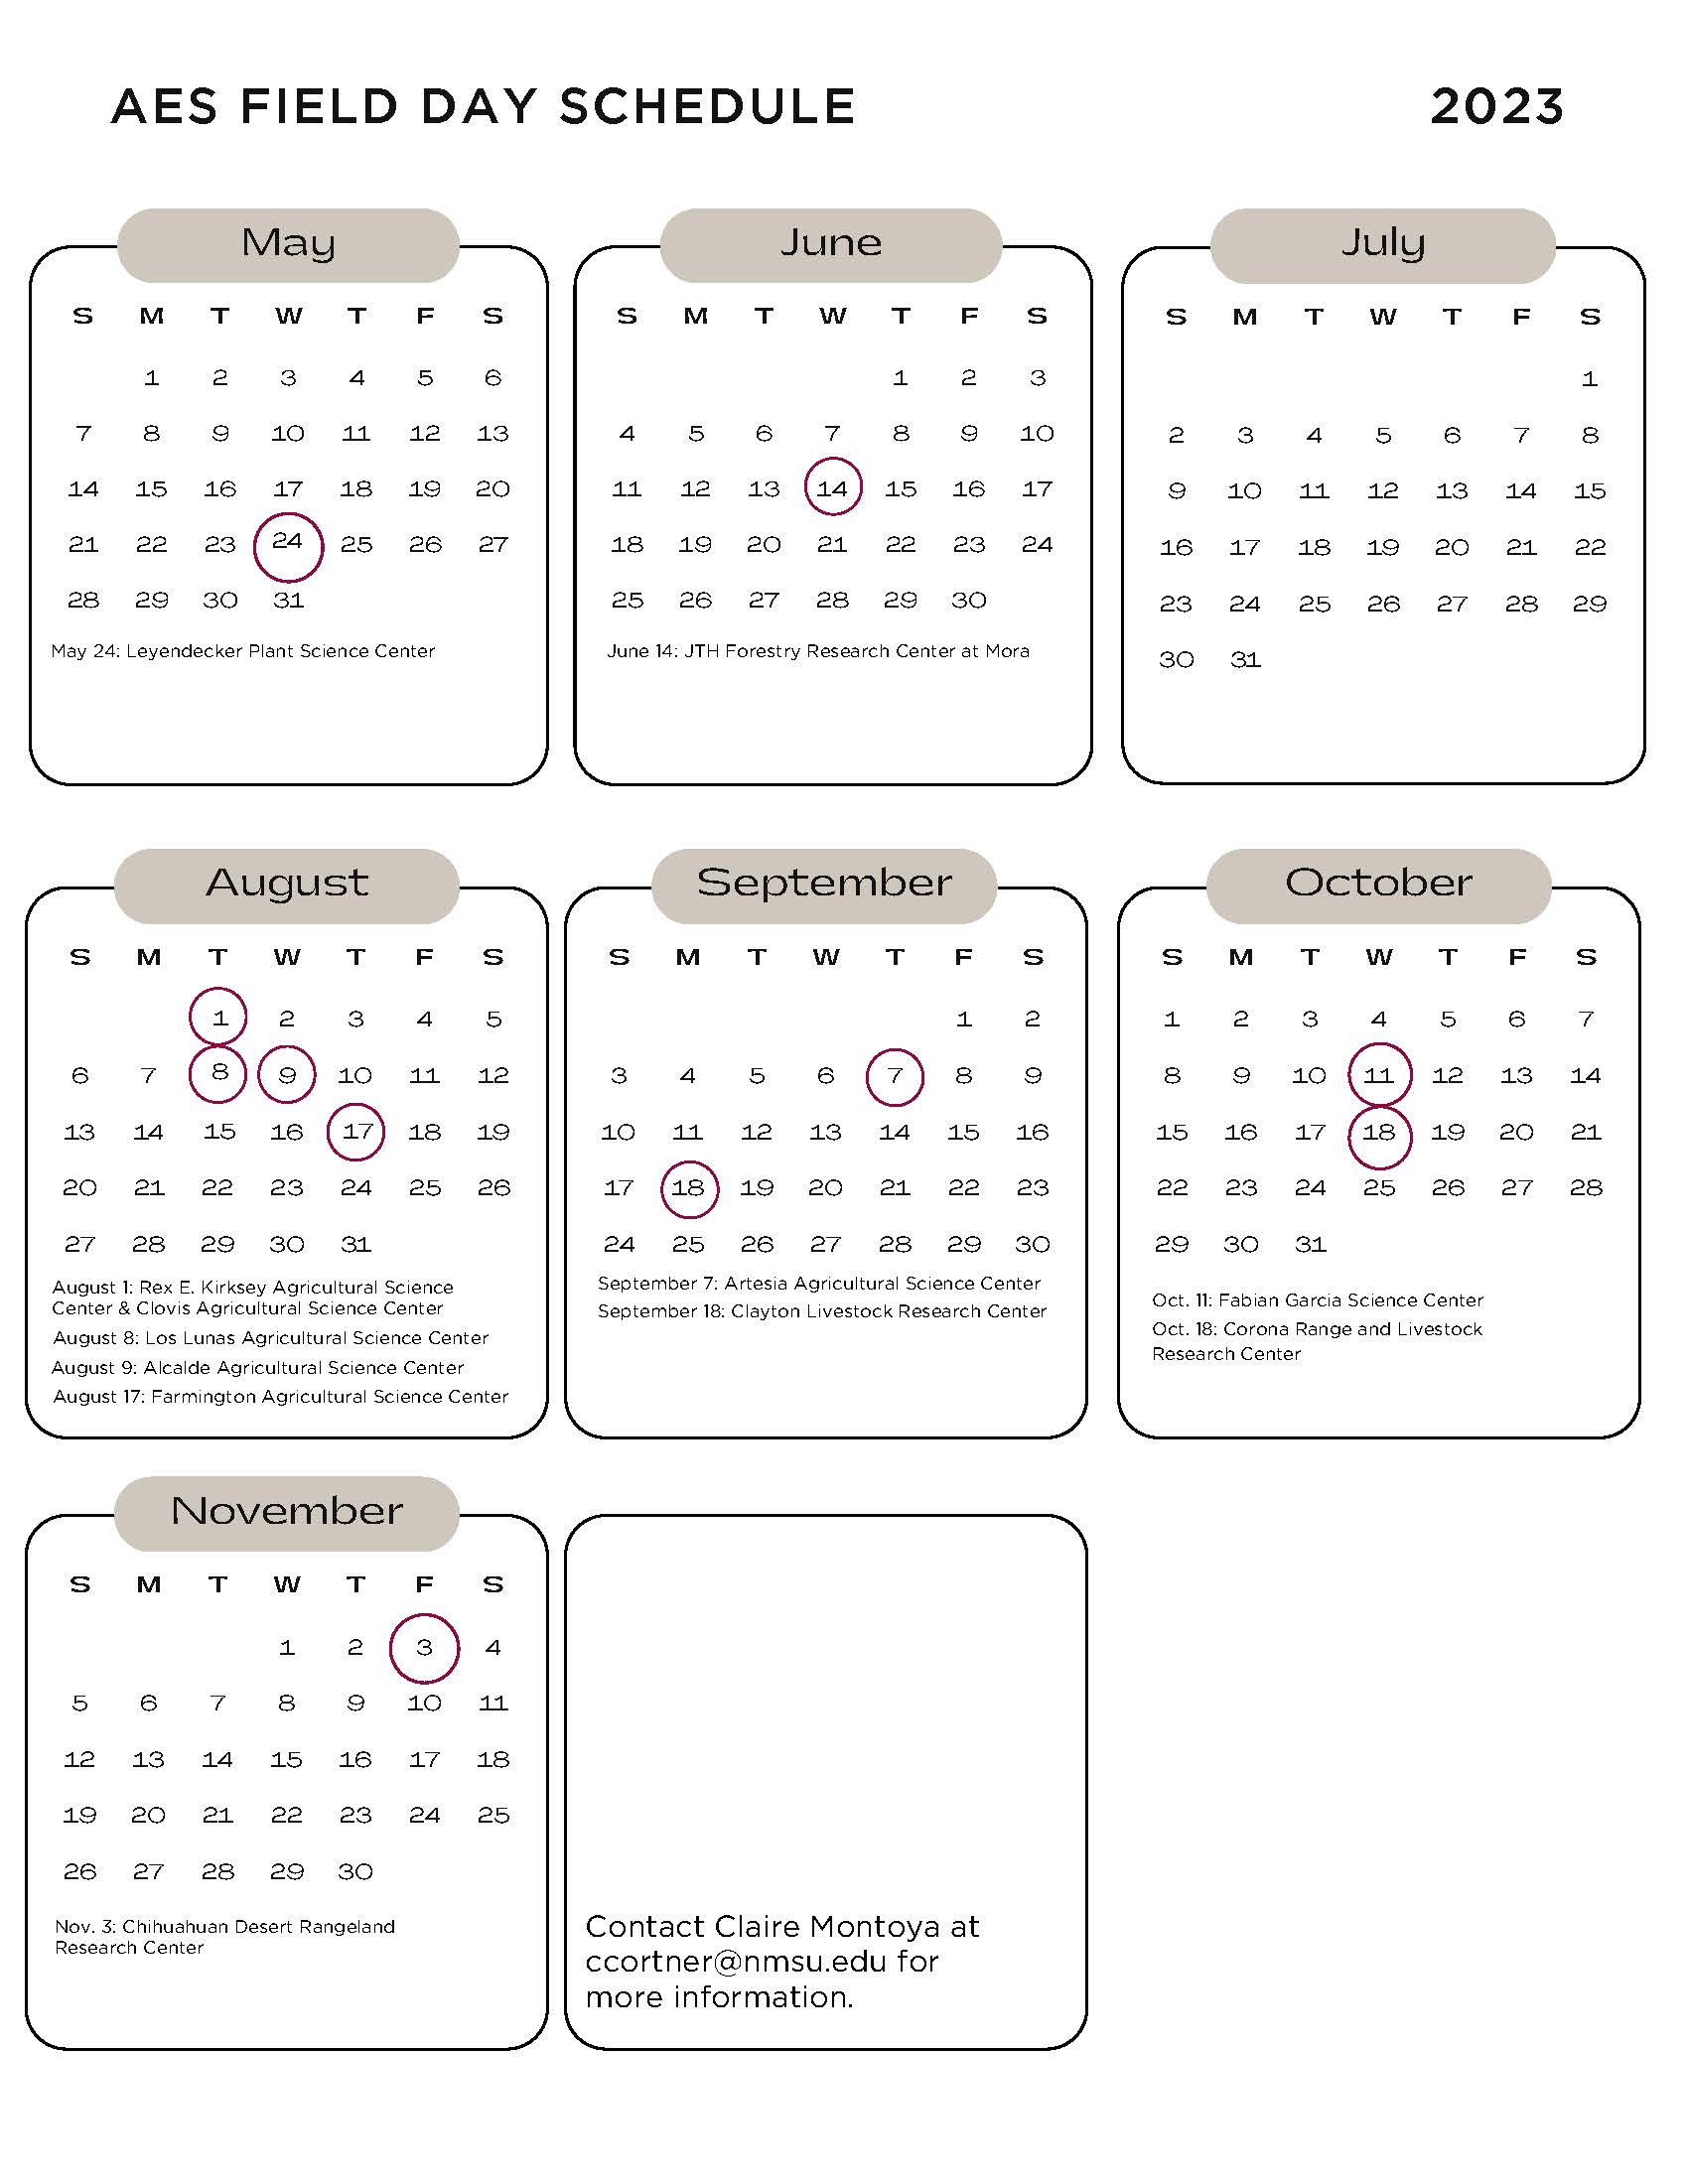 AES-2023-Field-Day-Calendar.jpg